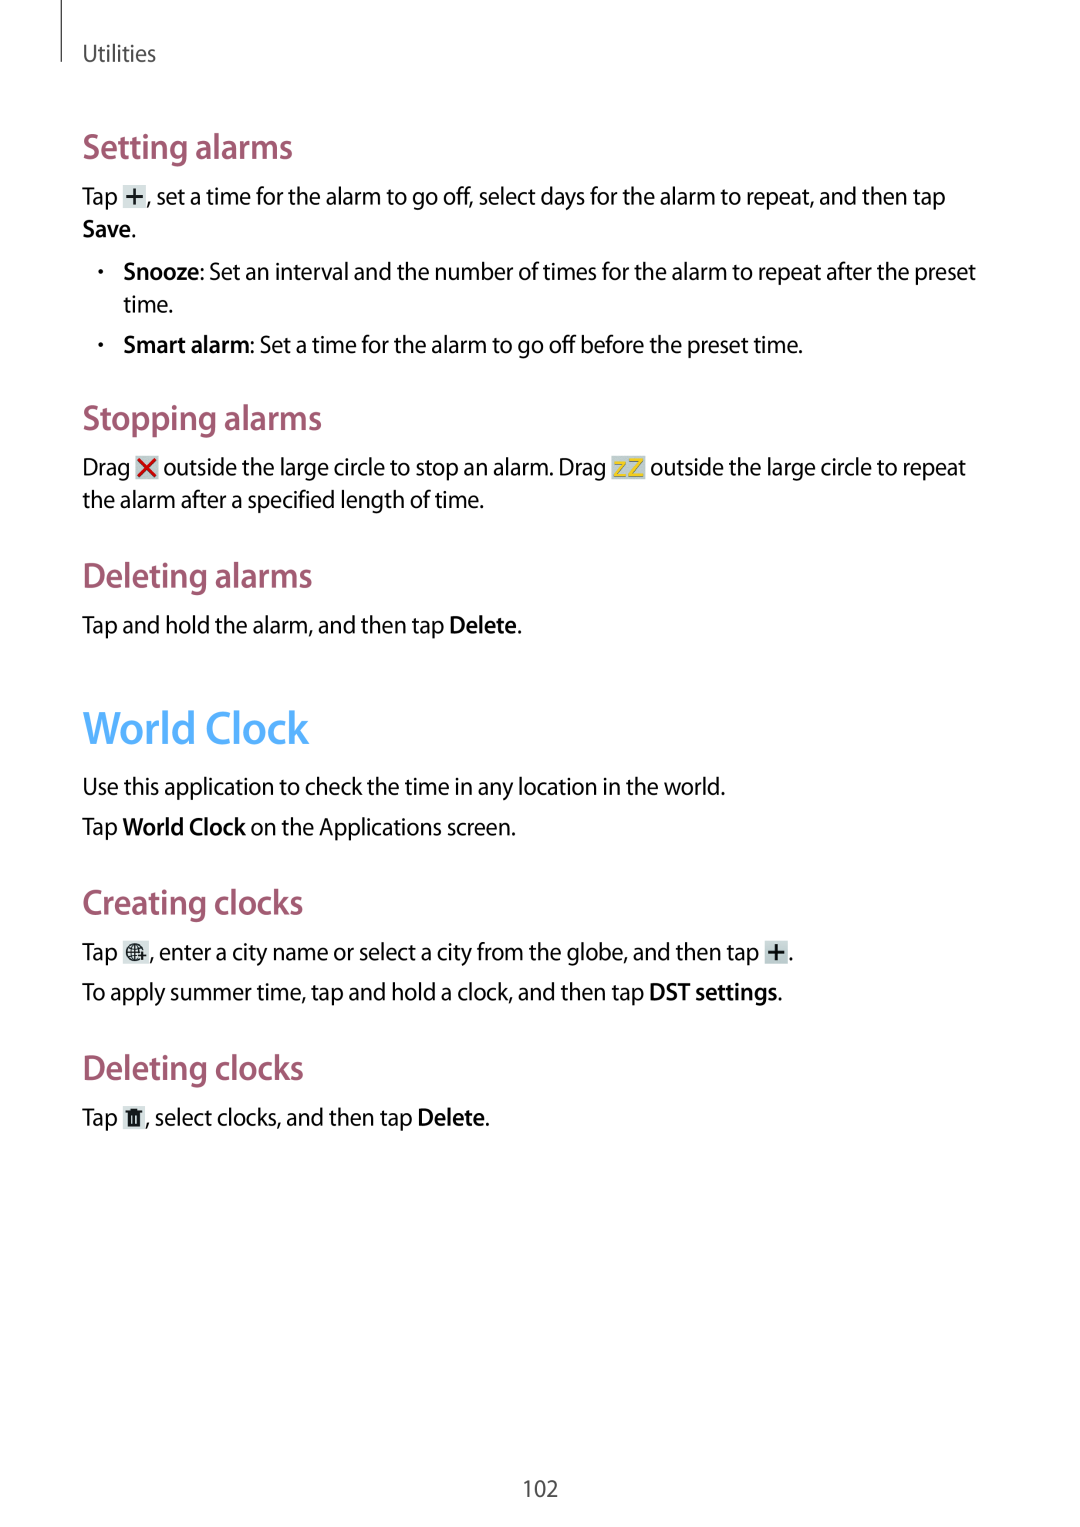 Samsung GT-N5100 World Clock, Setting alarms, Stopping alarms, Deleting alarms, Creating clocks, Deleting clocks 